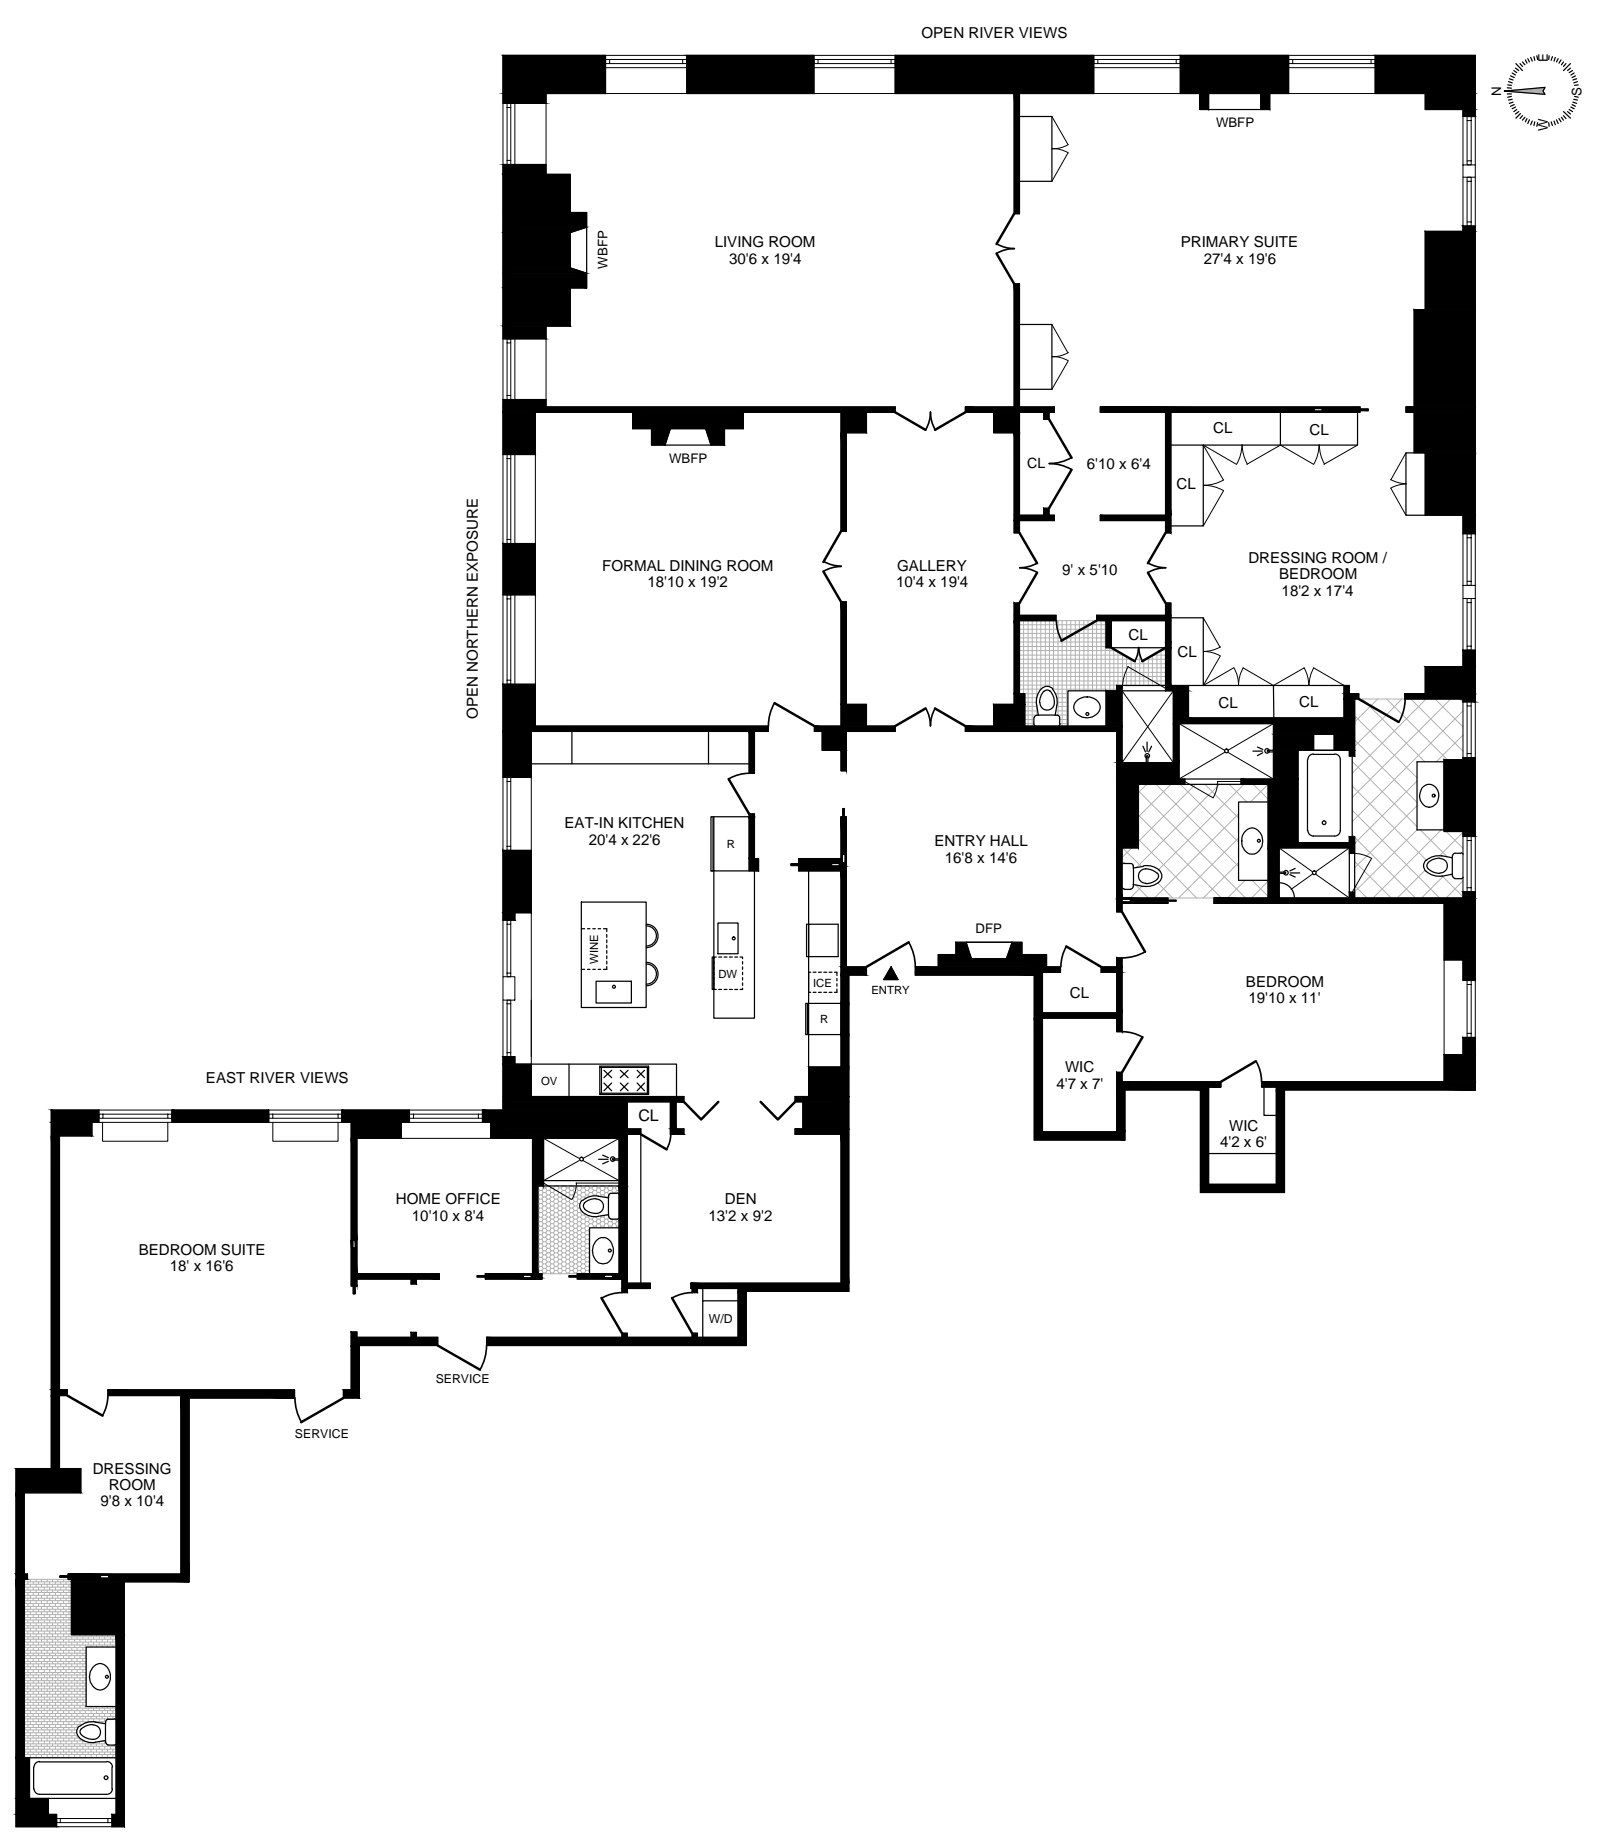 Floorplan for 1 Sutton Place South, 11A